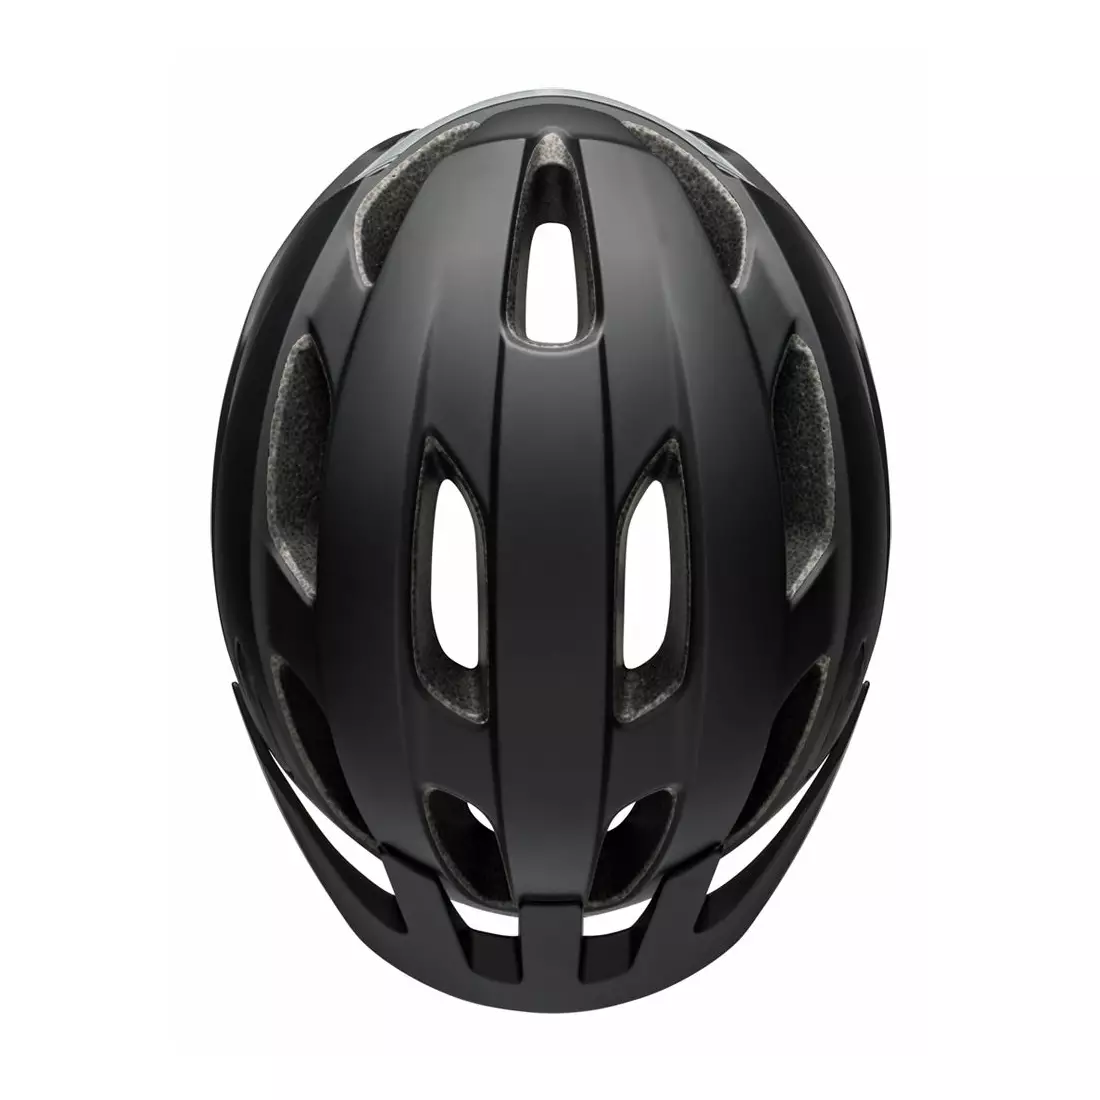 Bike helmet mtb BELL TRACE INTEGRATED MIPS matte black